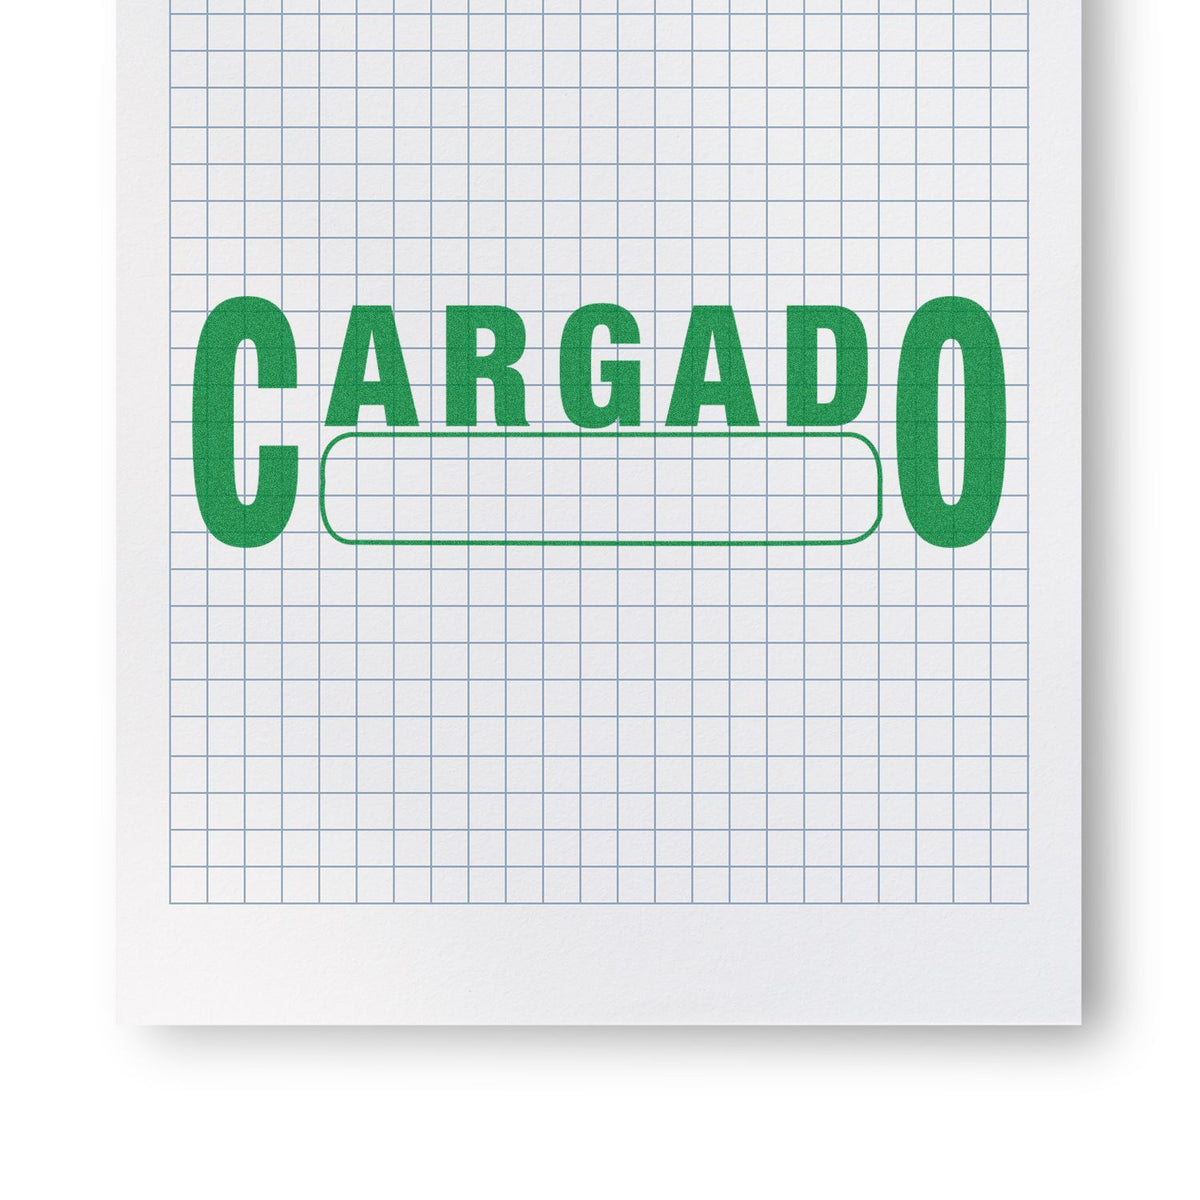 Self-Inking Cargado Stamp In Use